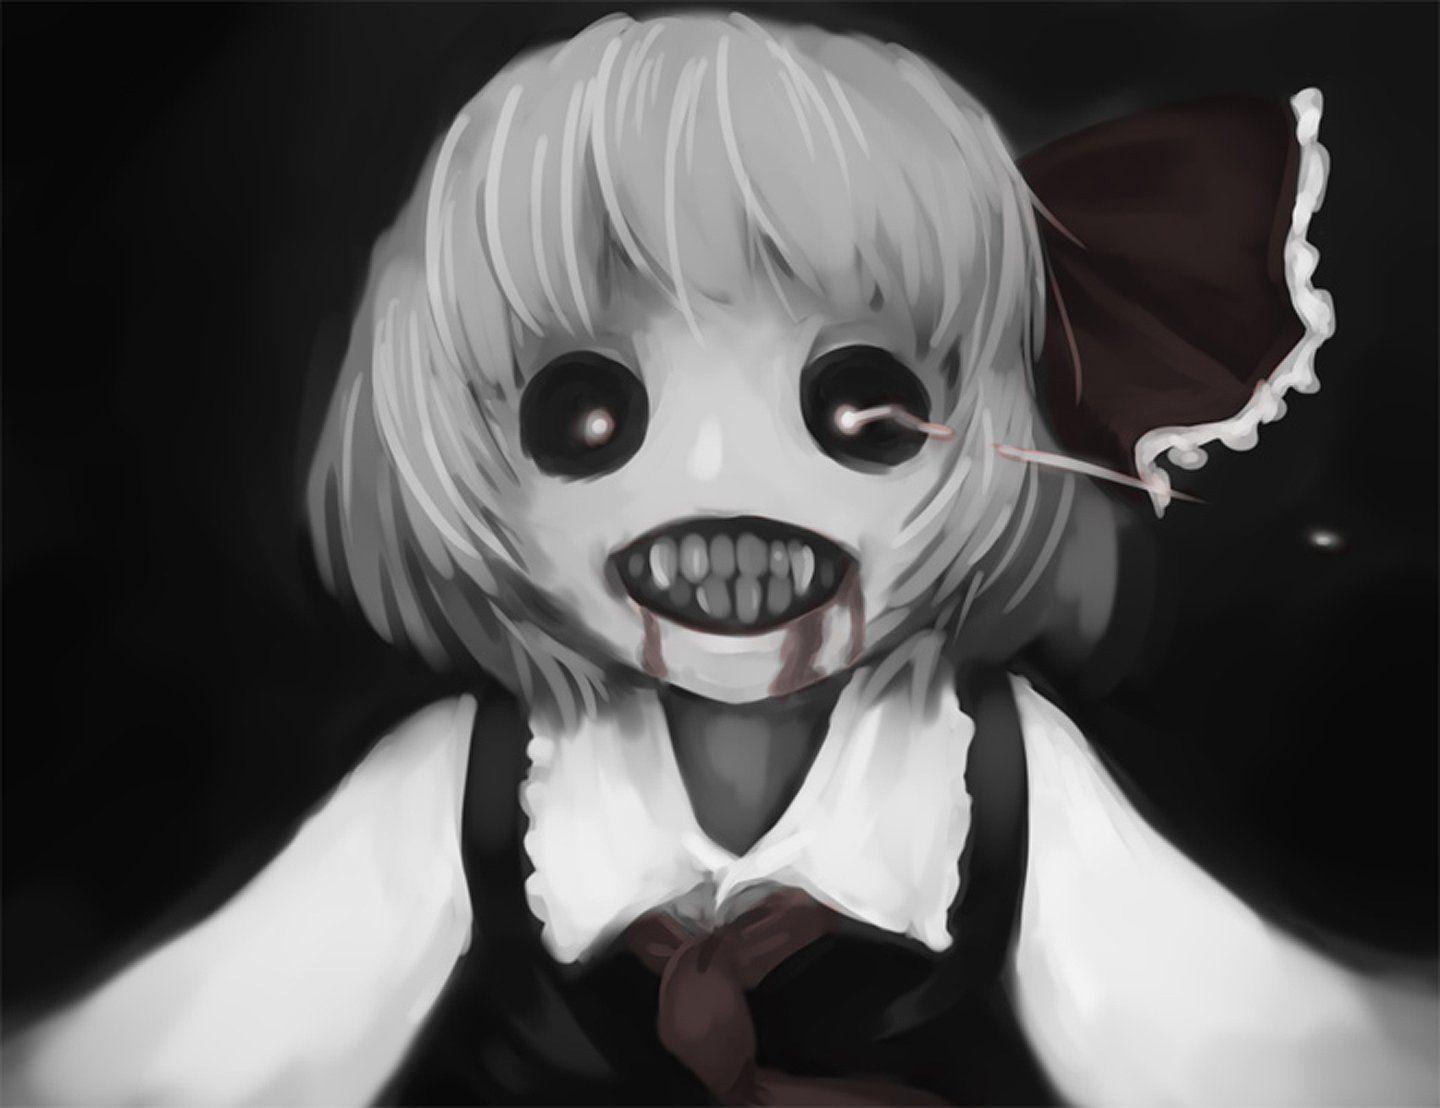 SOOTY   on Twitter Creepy Cool Horror Anime  Manga anime  artwork horror Unknown Artists httpstcomQkNTG0pvh  Twitter